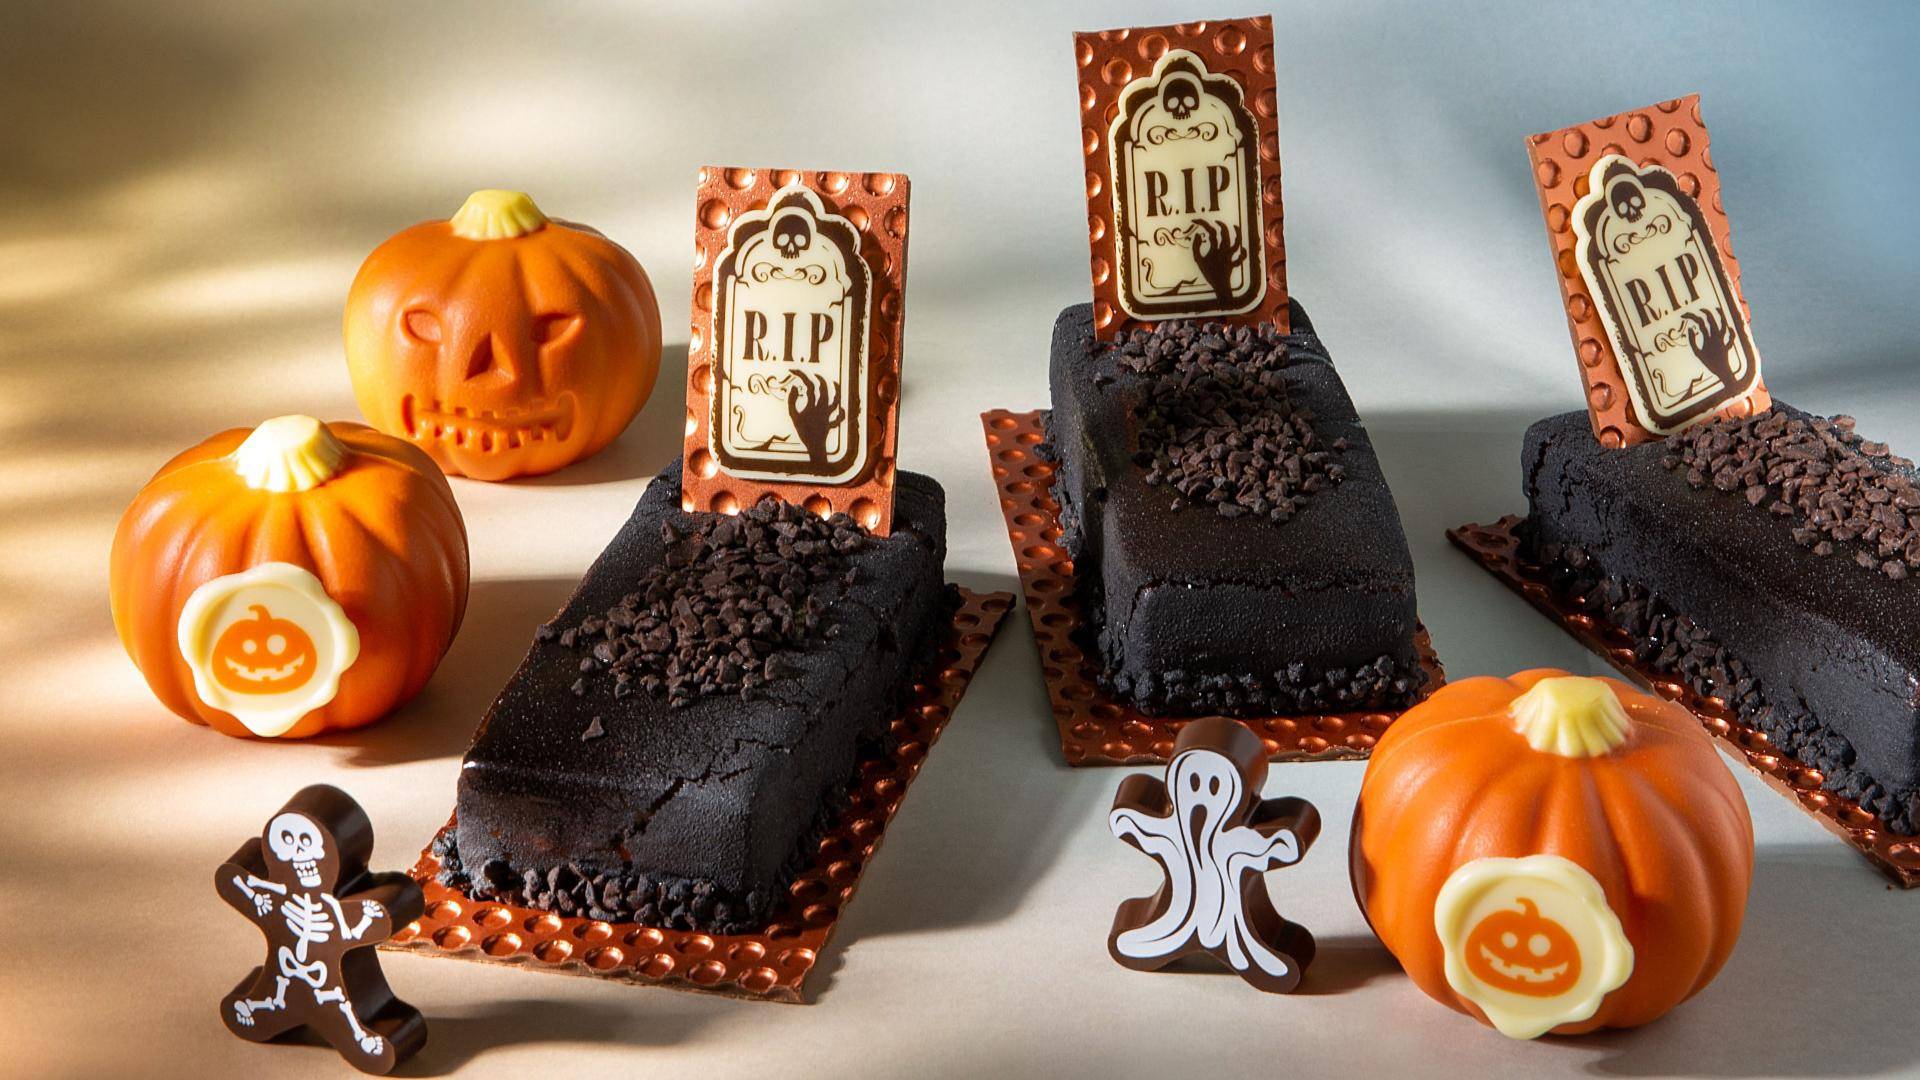 Chocolate pumpkins, cake graves and chocolate skeletons